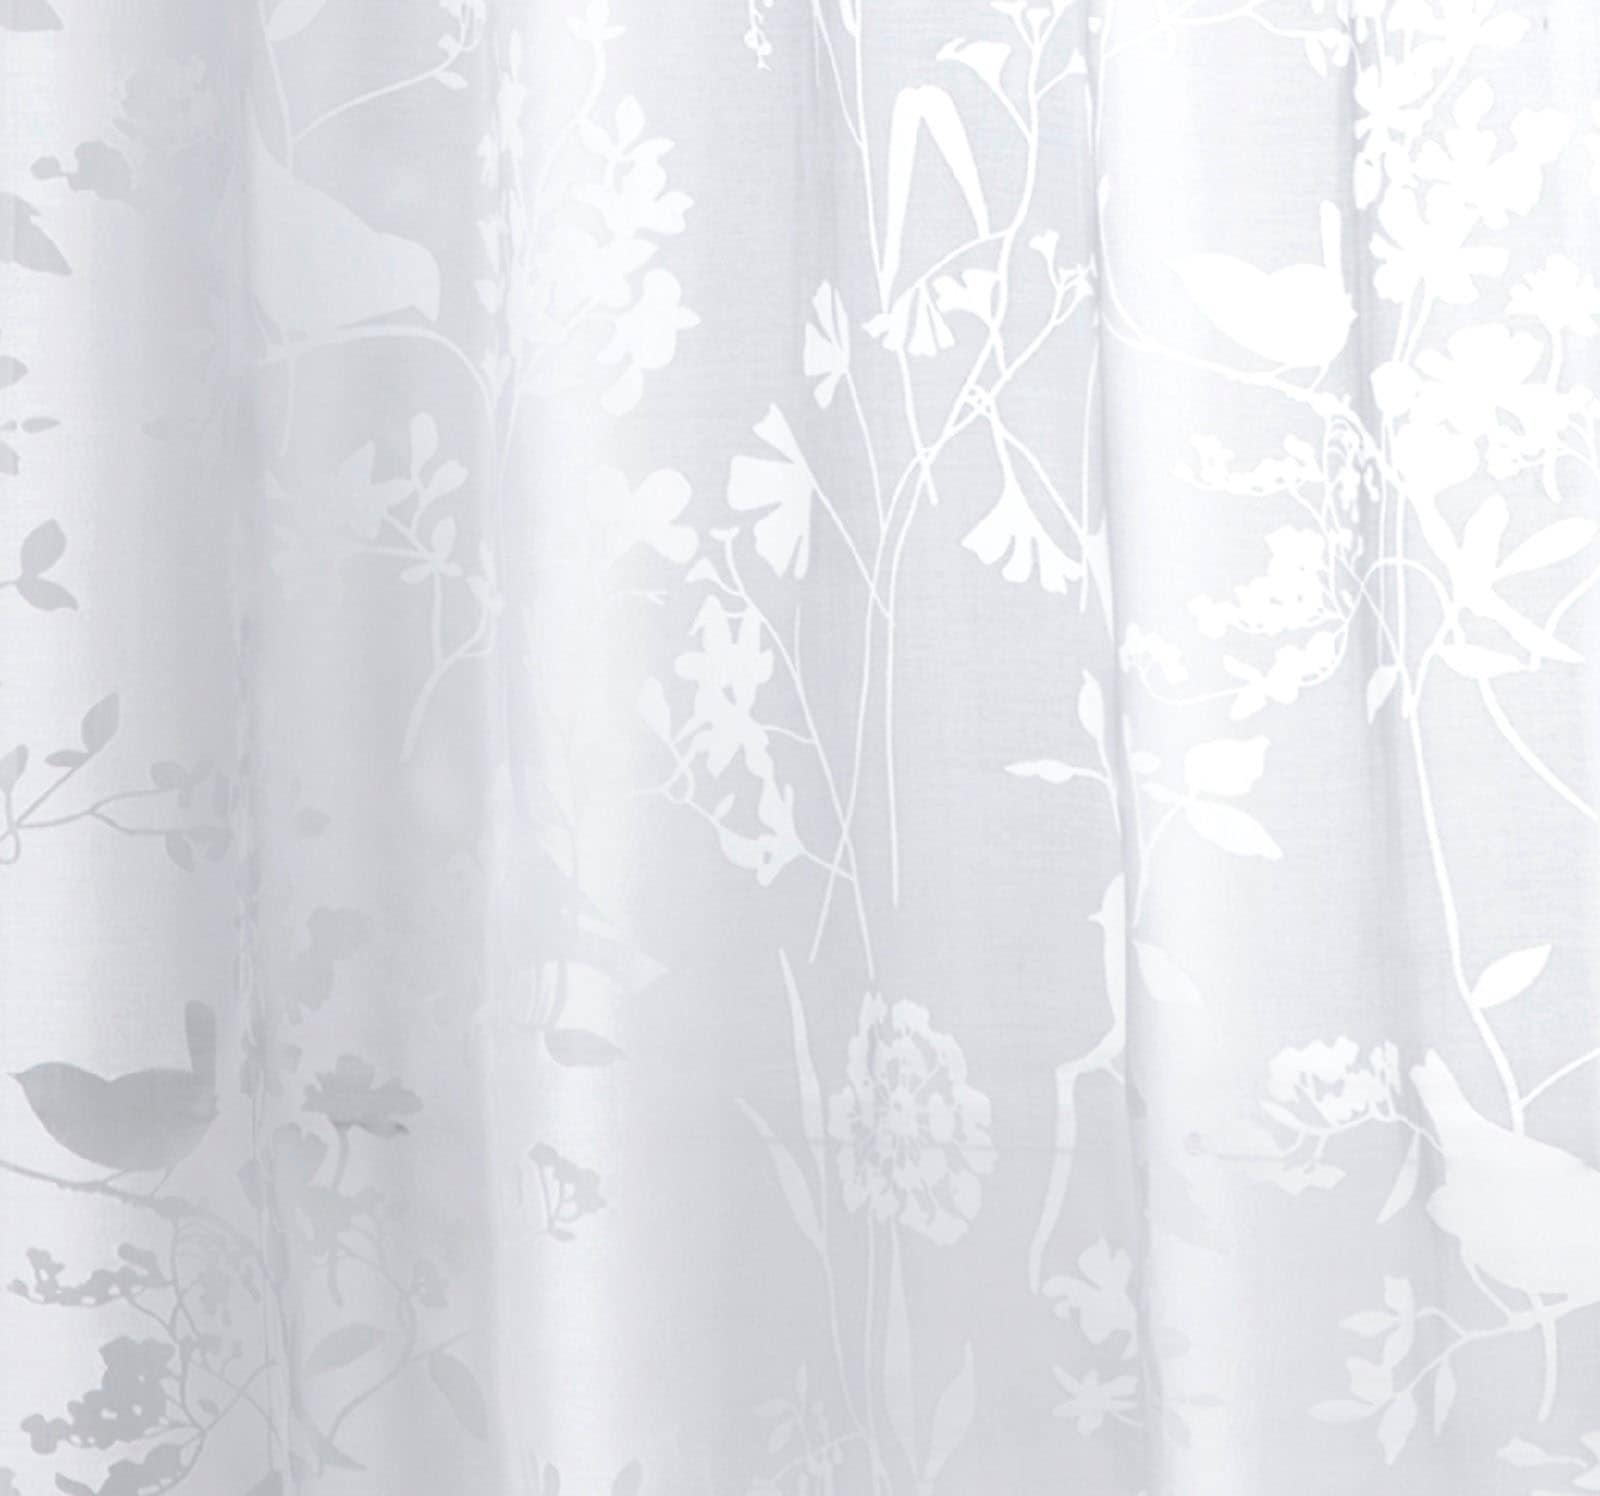 Weckbrodt Vorhang »Shorty«, (1 St.), Gardine, transparent, Ausbrenner, Allover, Motiv Vögel und Zweige